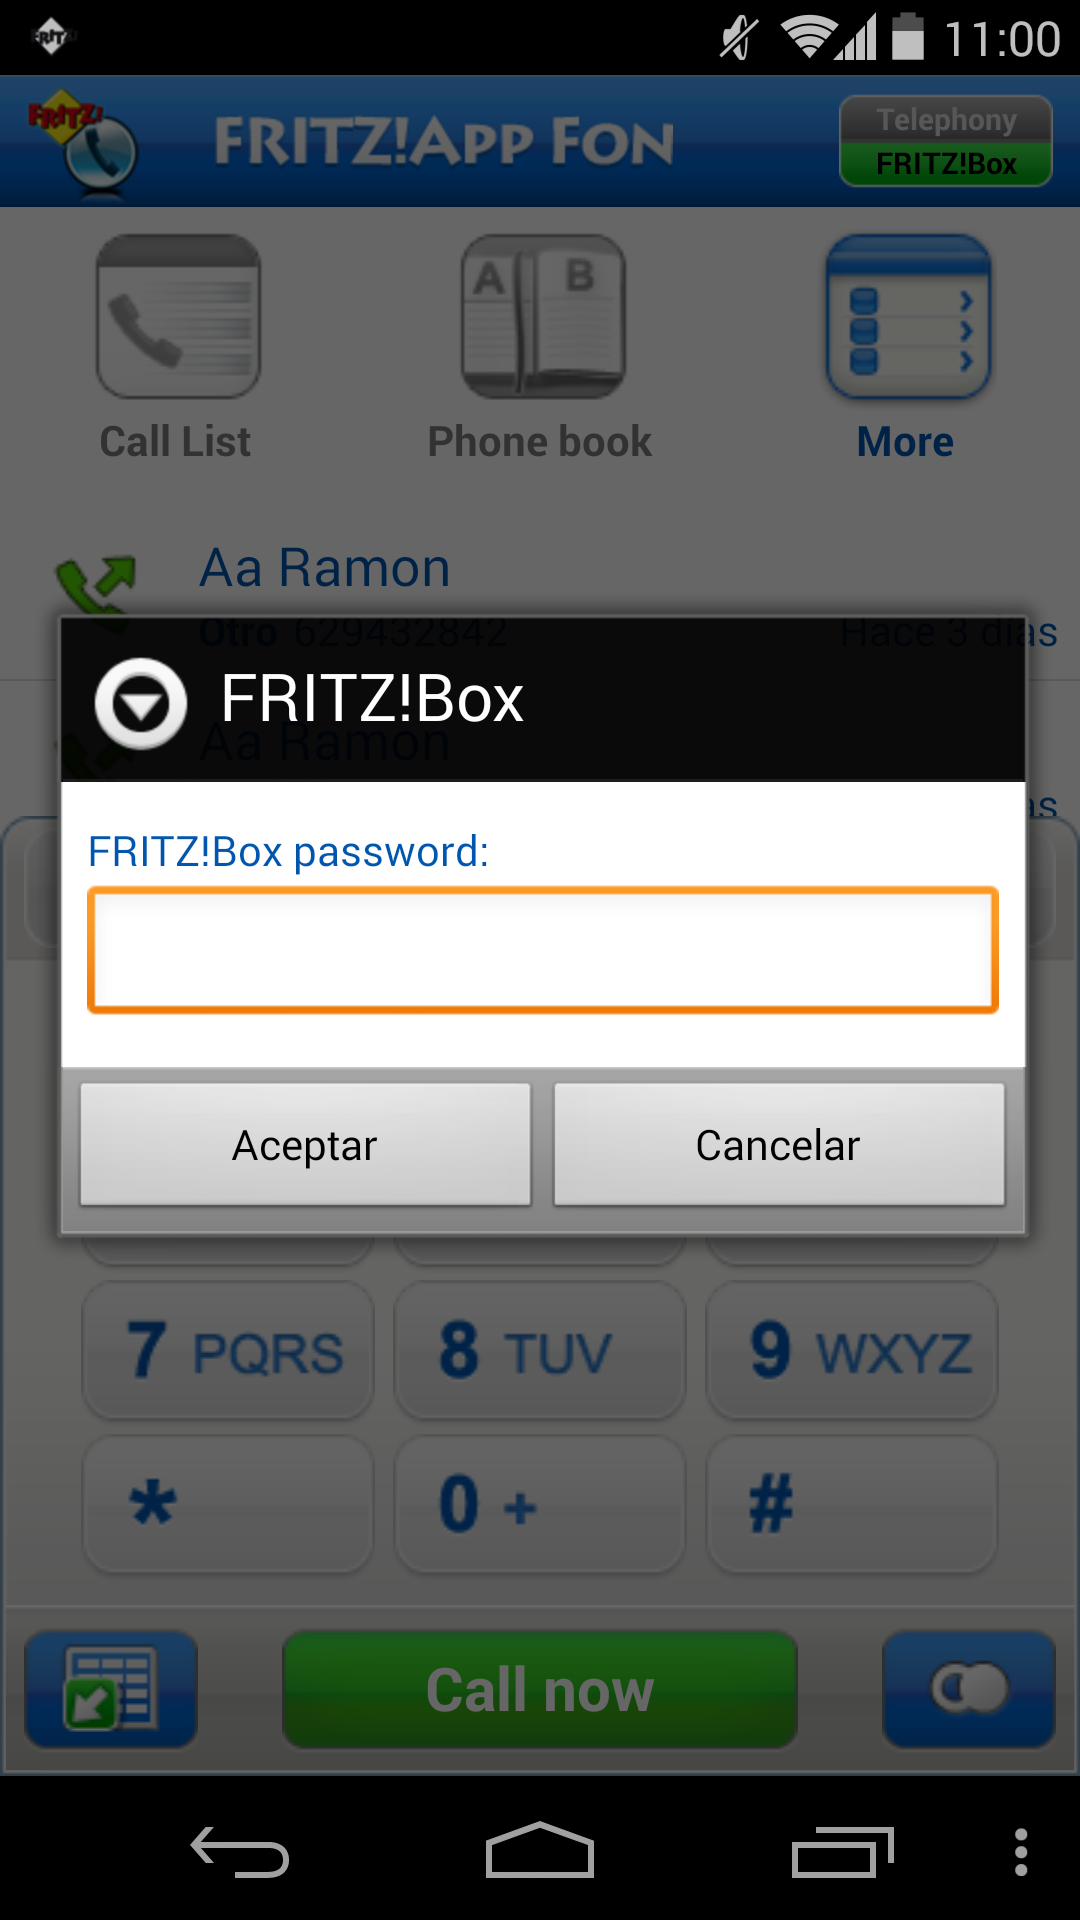 Utilización de FRITZ!App Fon 1